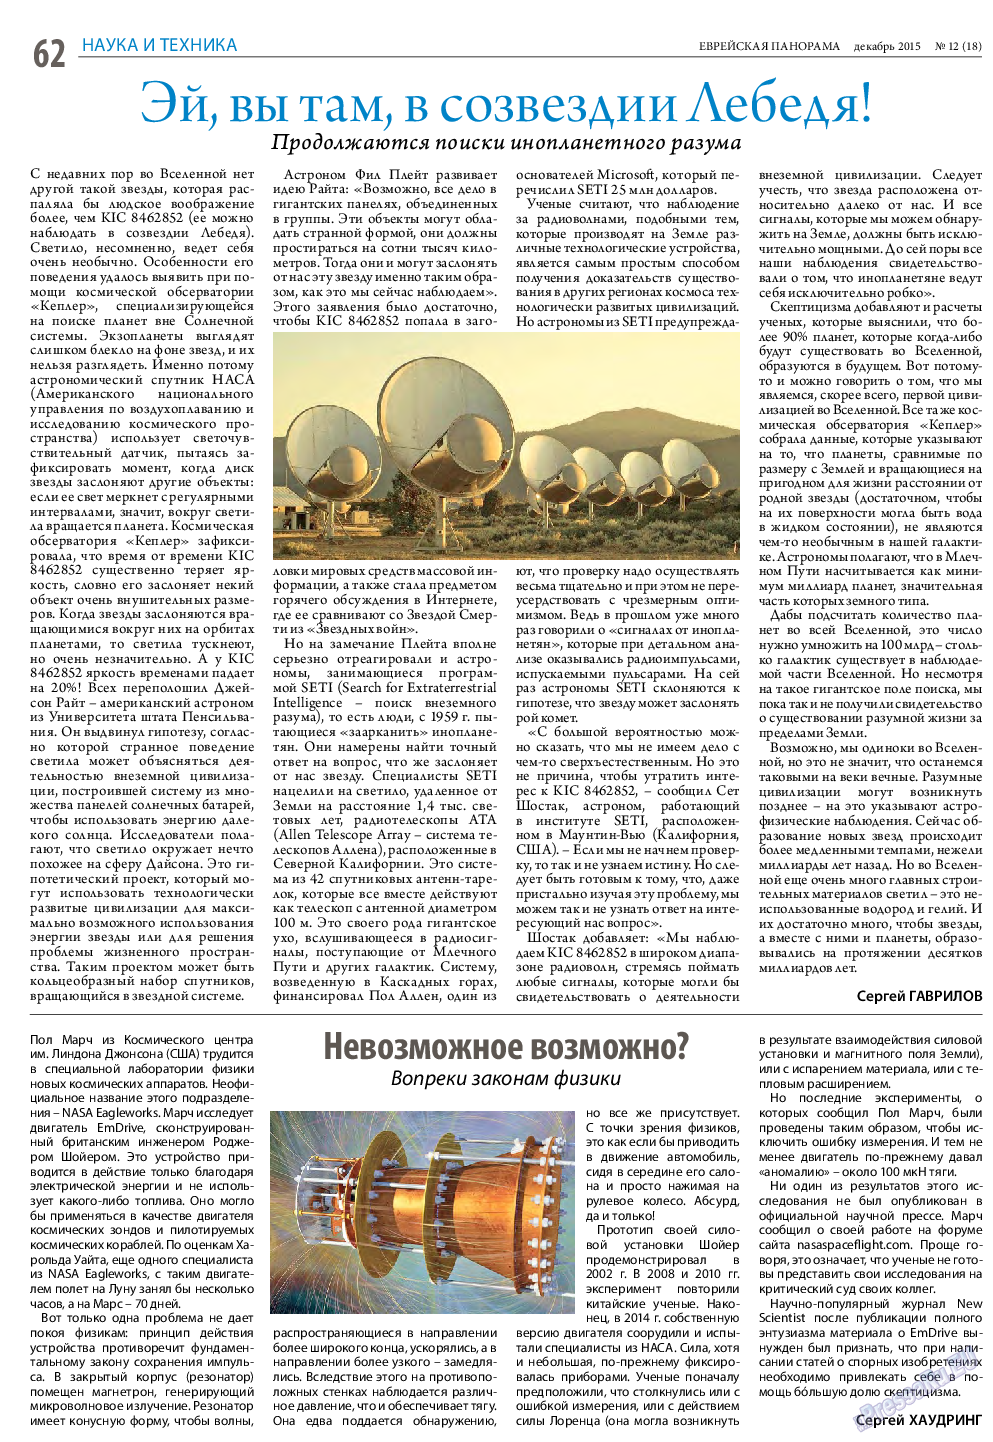 Еврейская панорама, газета. 2015 №12 стр.62